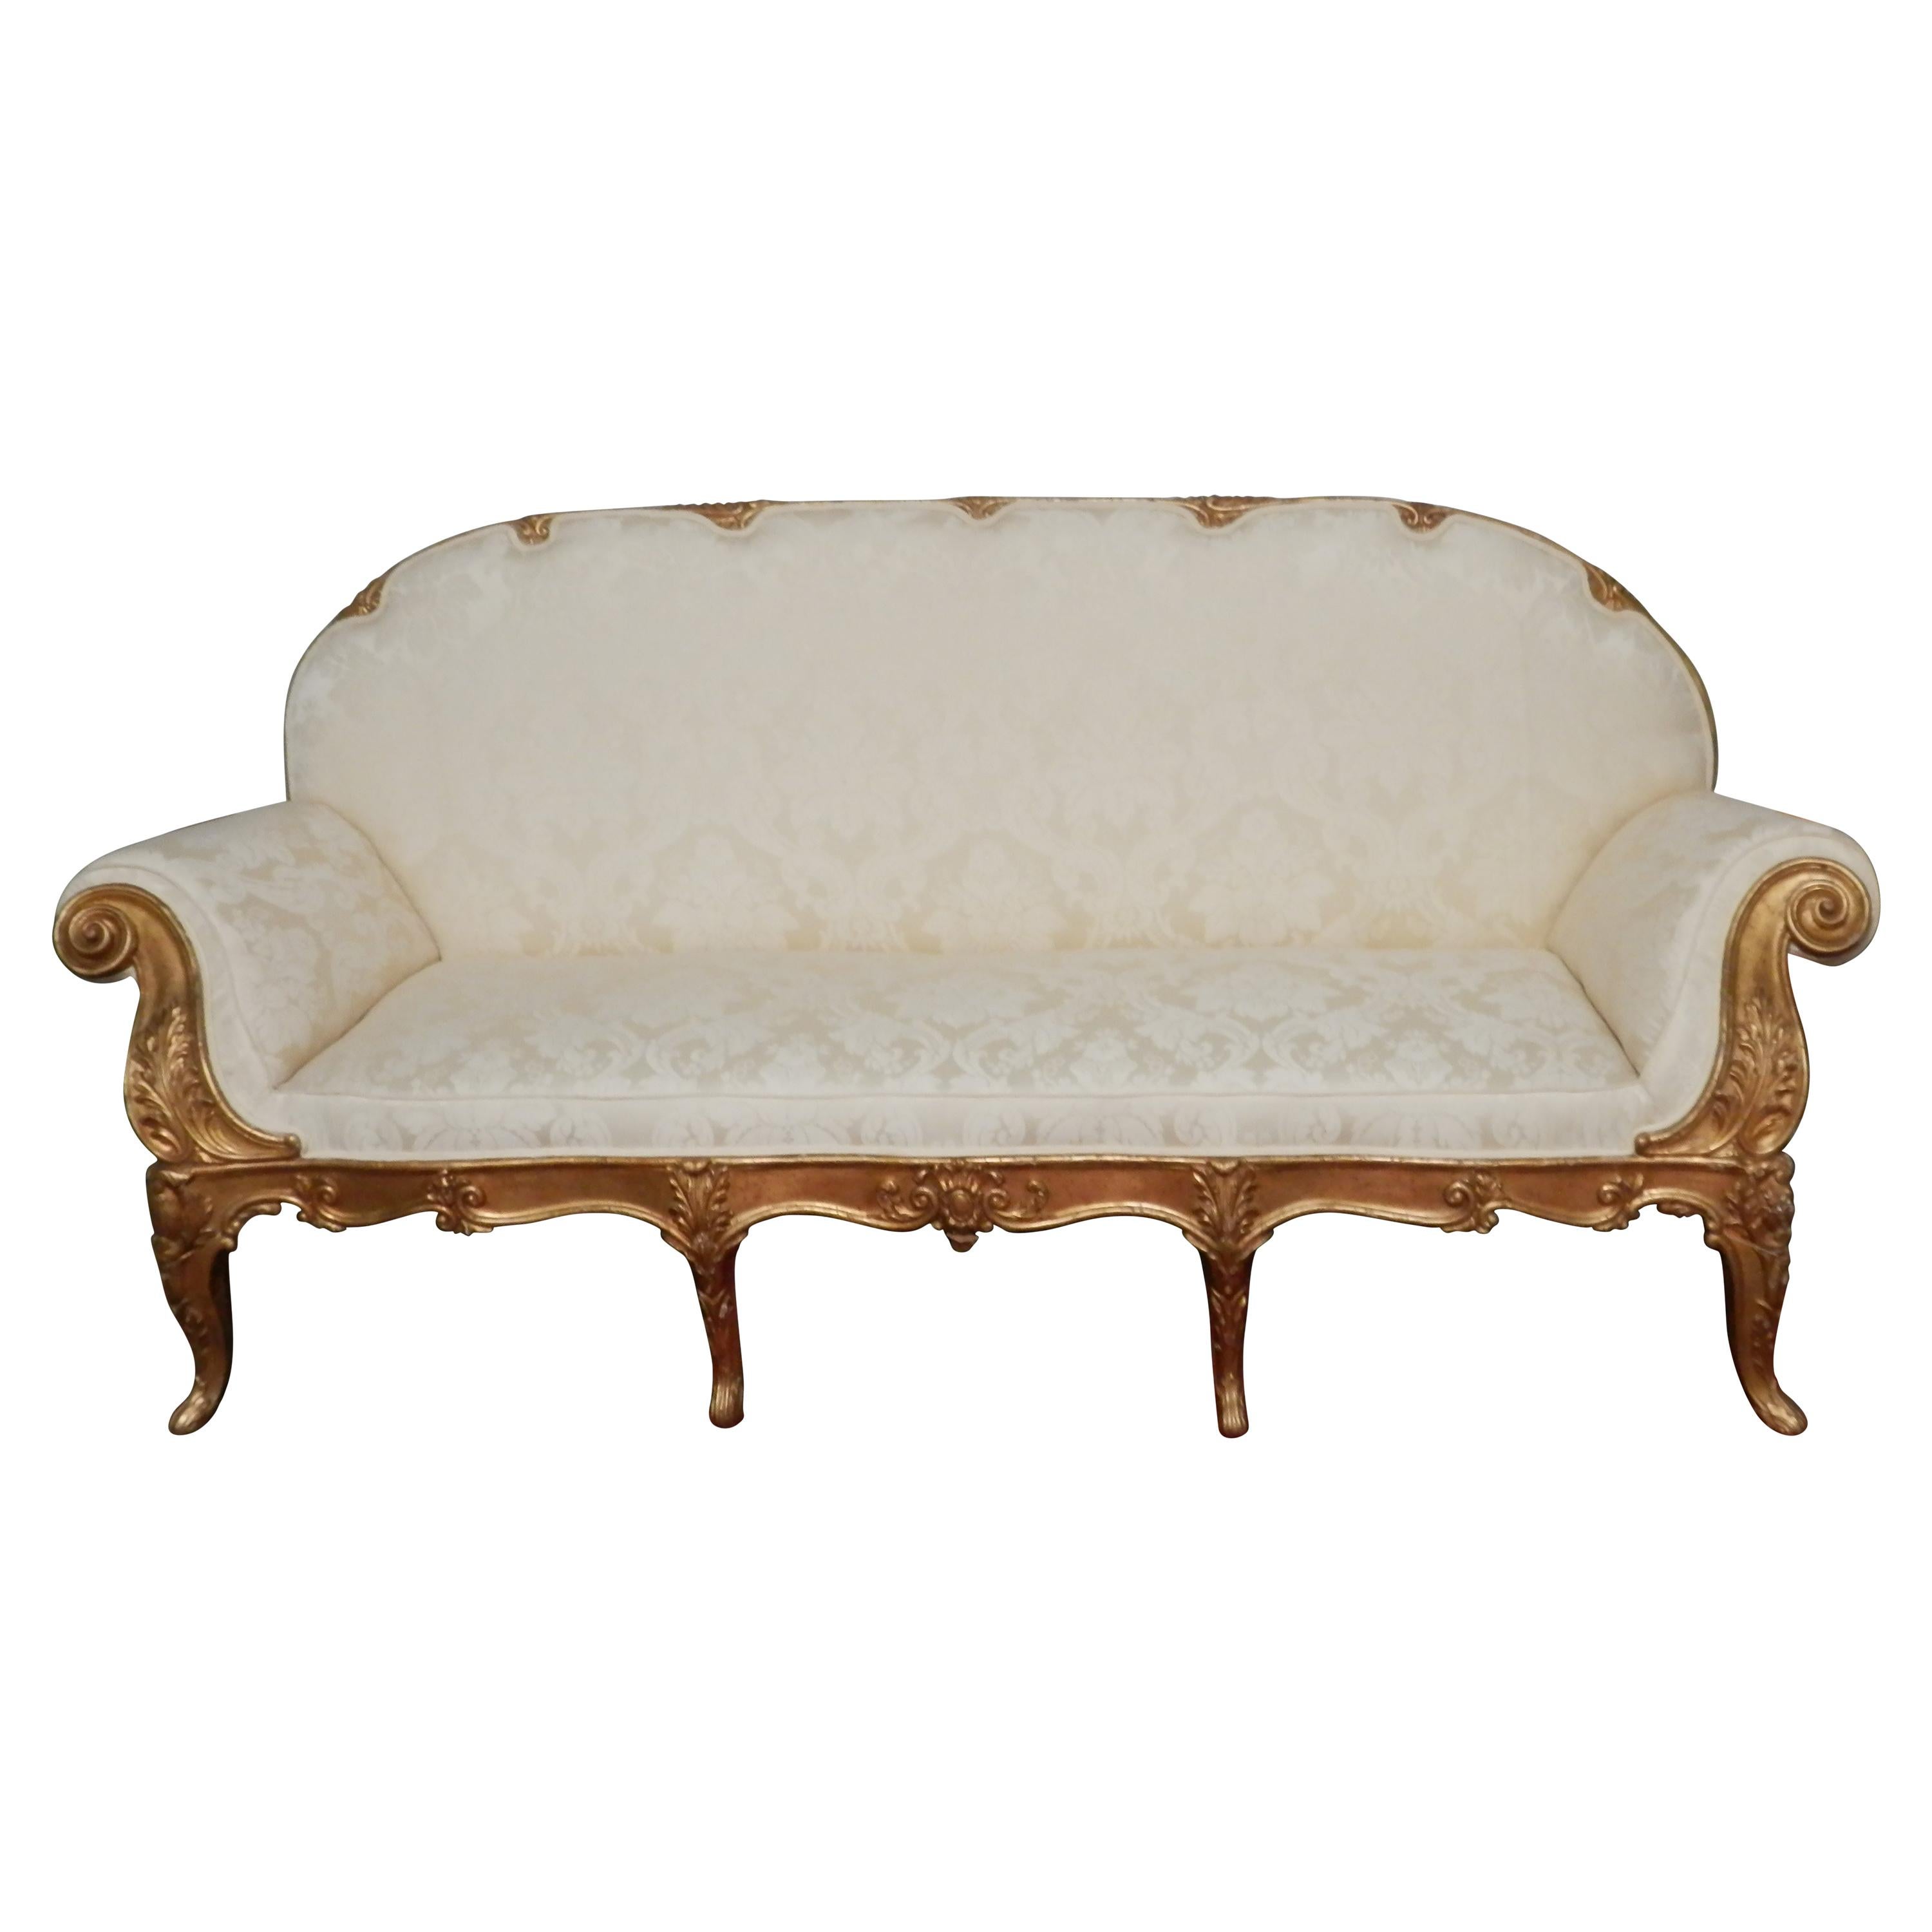 Rare Early 19th Century Italian Louis XV Gilt Carved Sofa